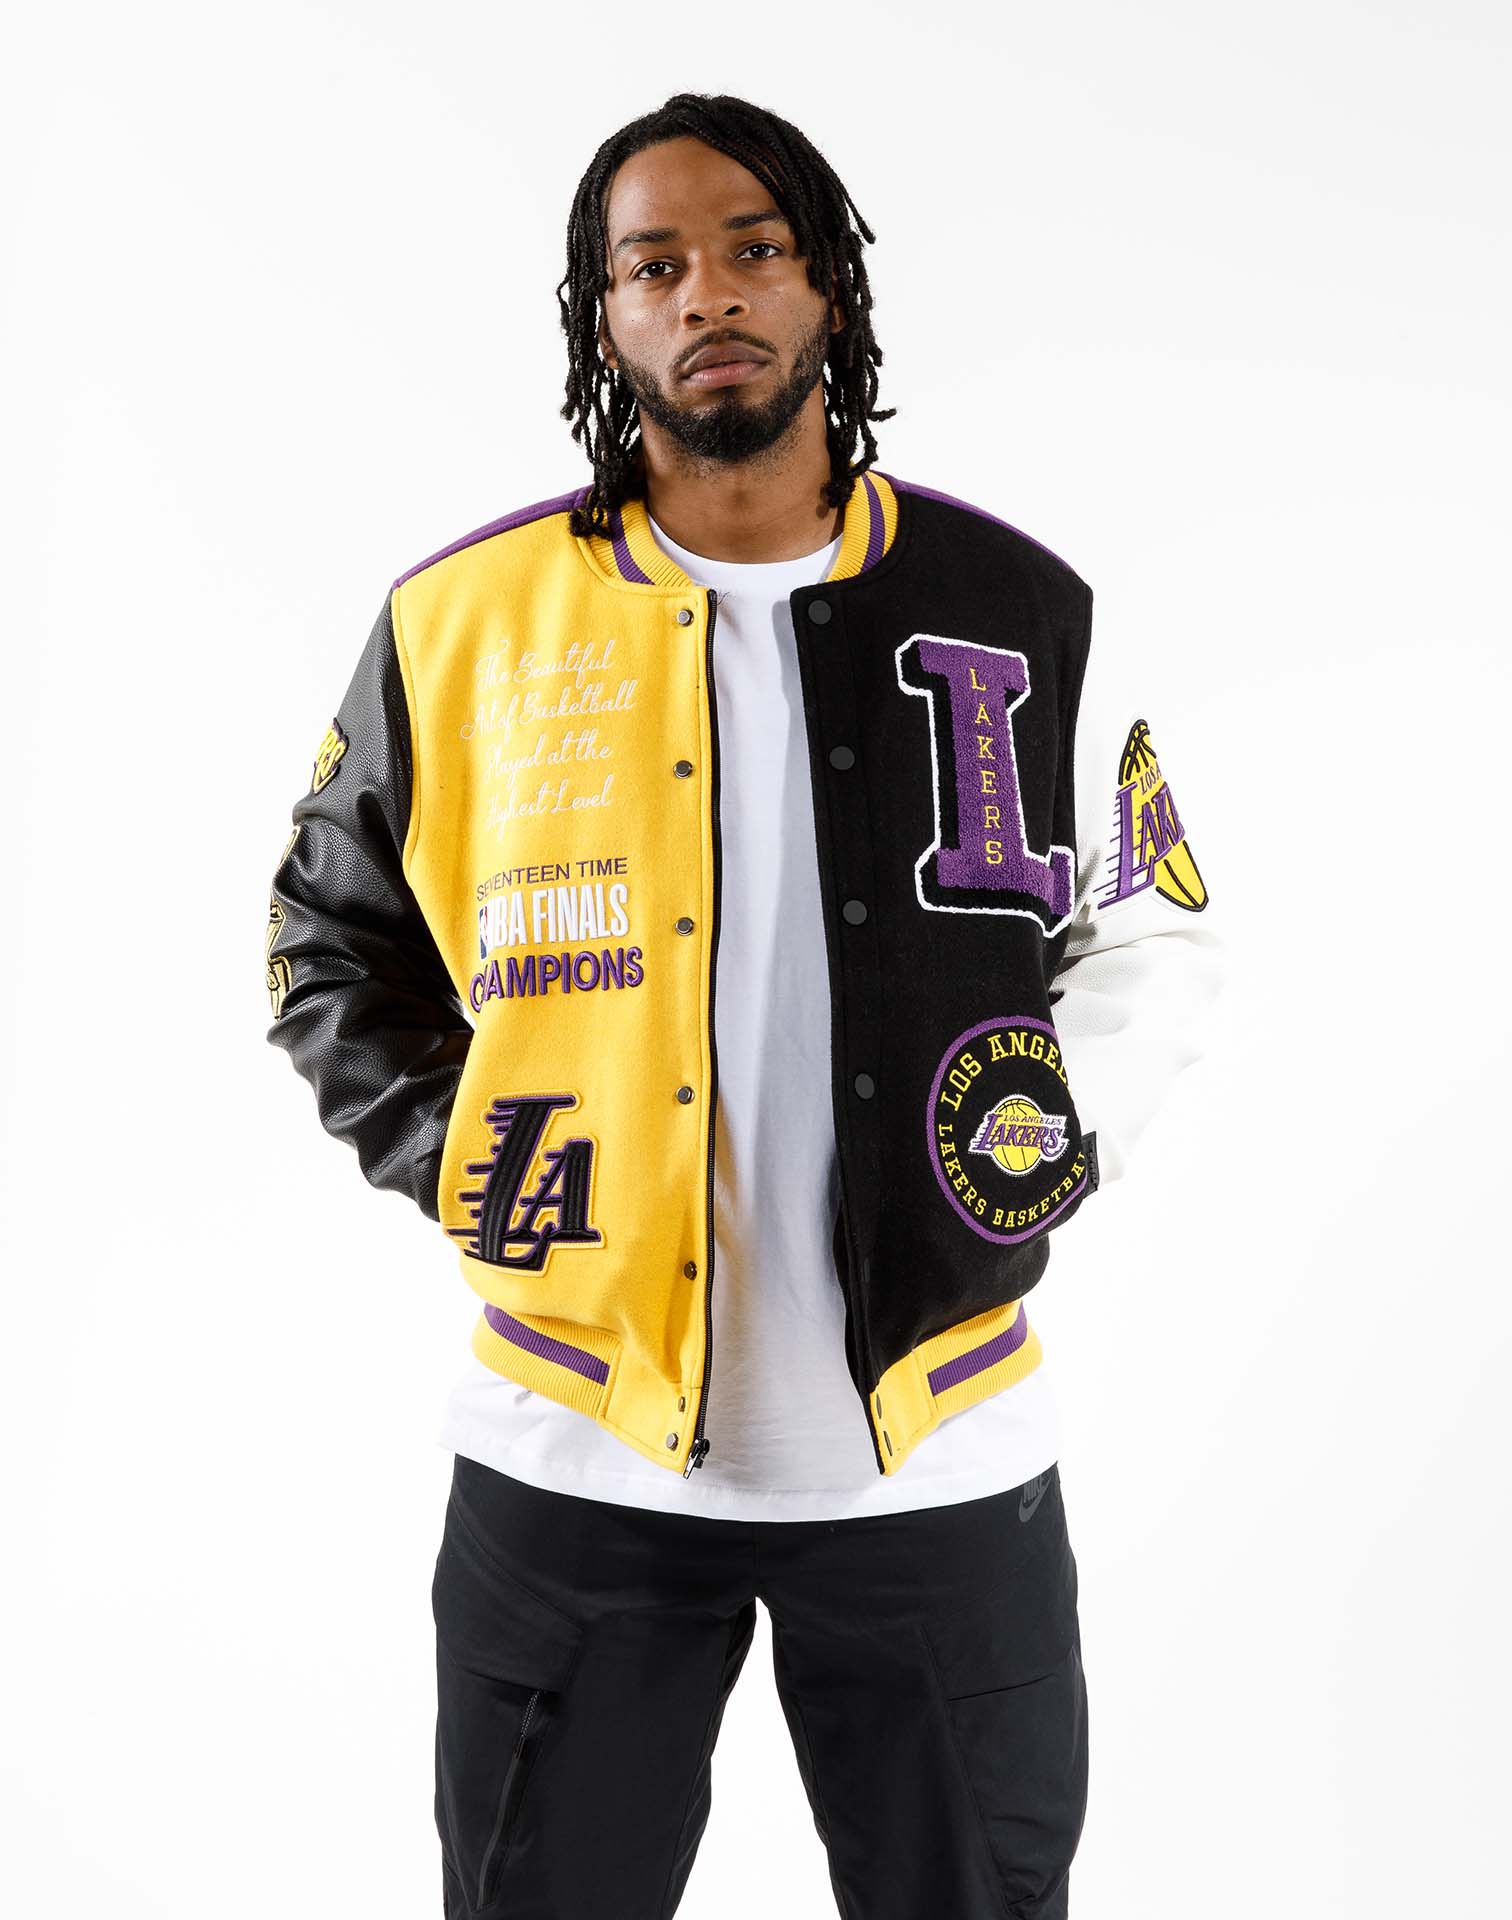 Lakers Varsity Jacket, Men's Fashion, Coats, Jackets and Outerwear